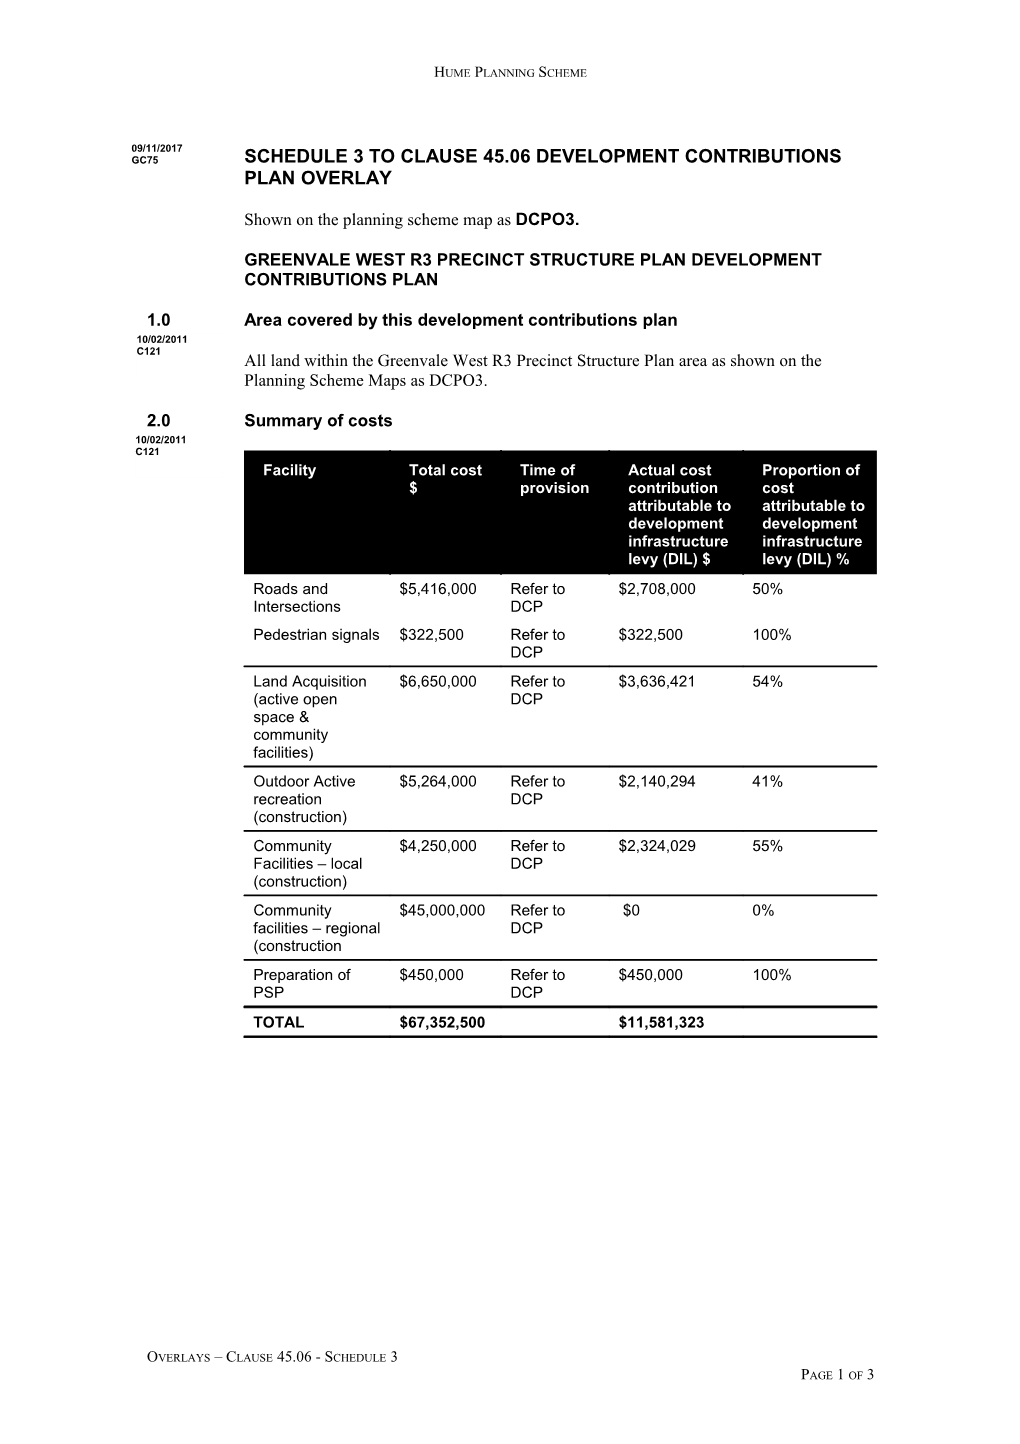 Greenvale West R3 Precinct Structure Plan Development Contributions Plan